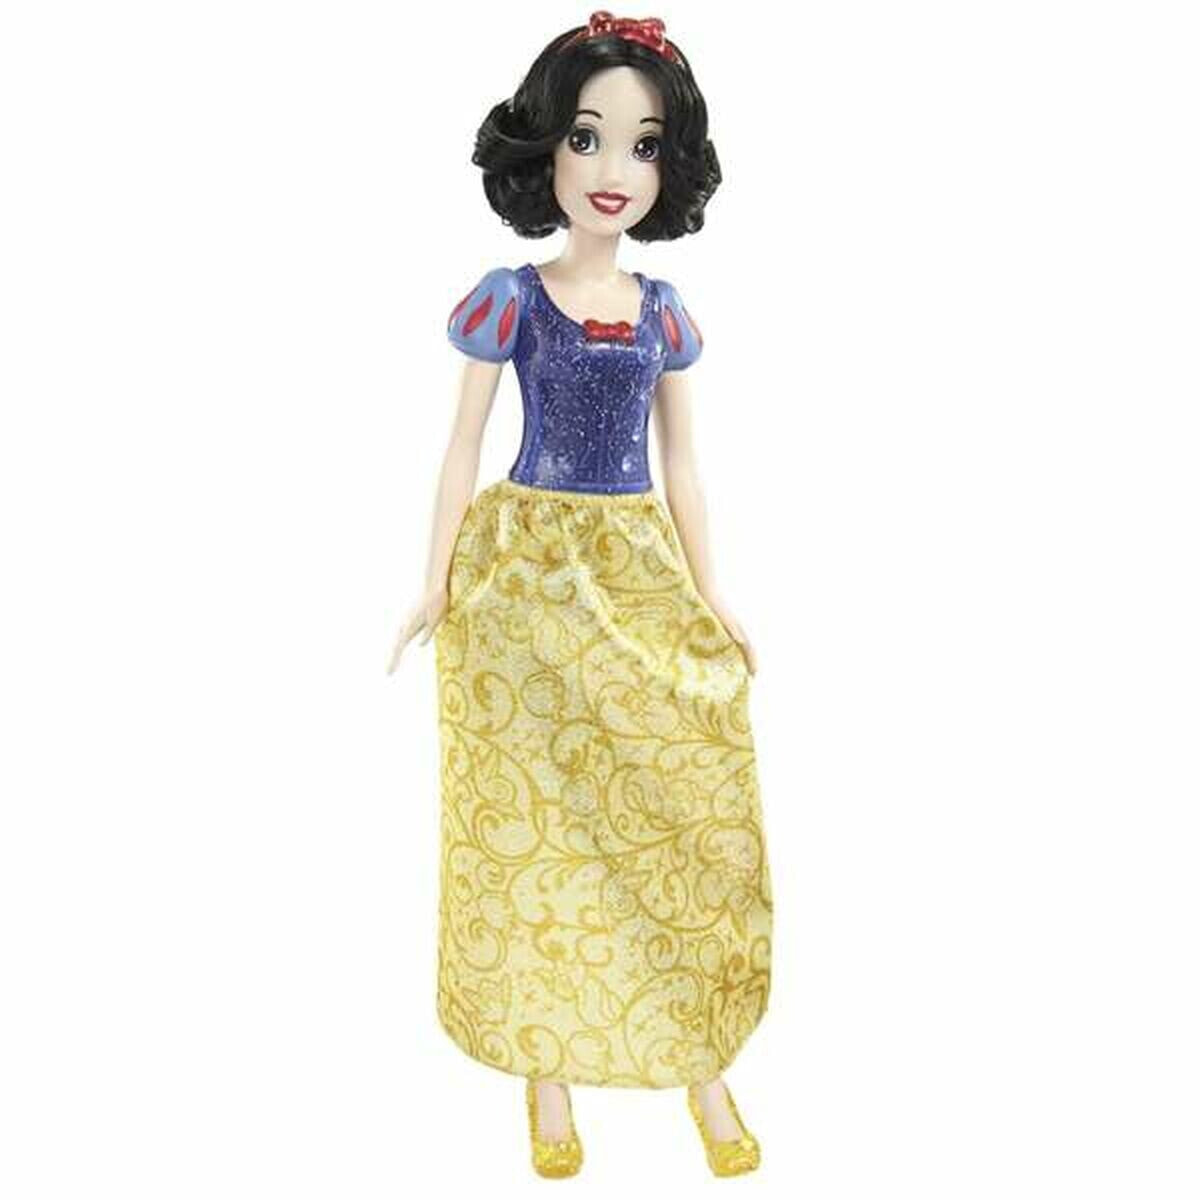 Doll Disney Snow White 29 cm